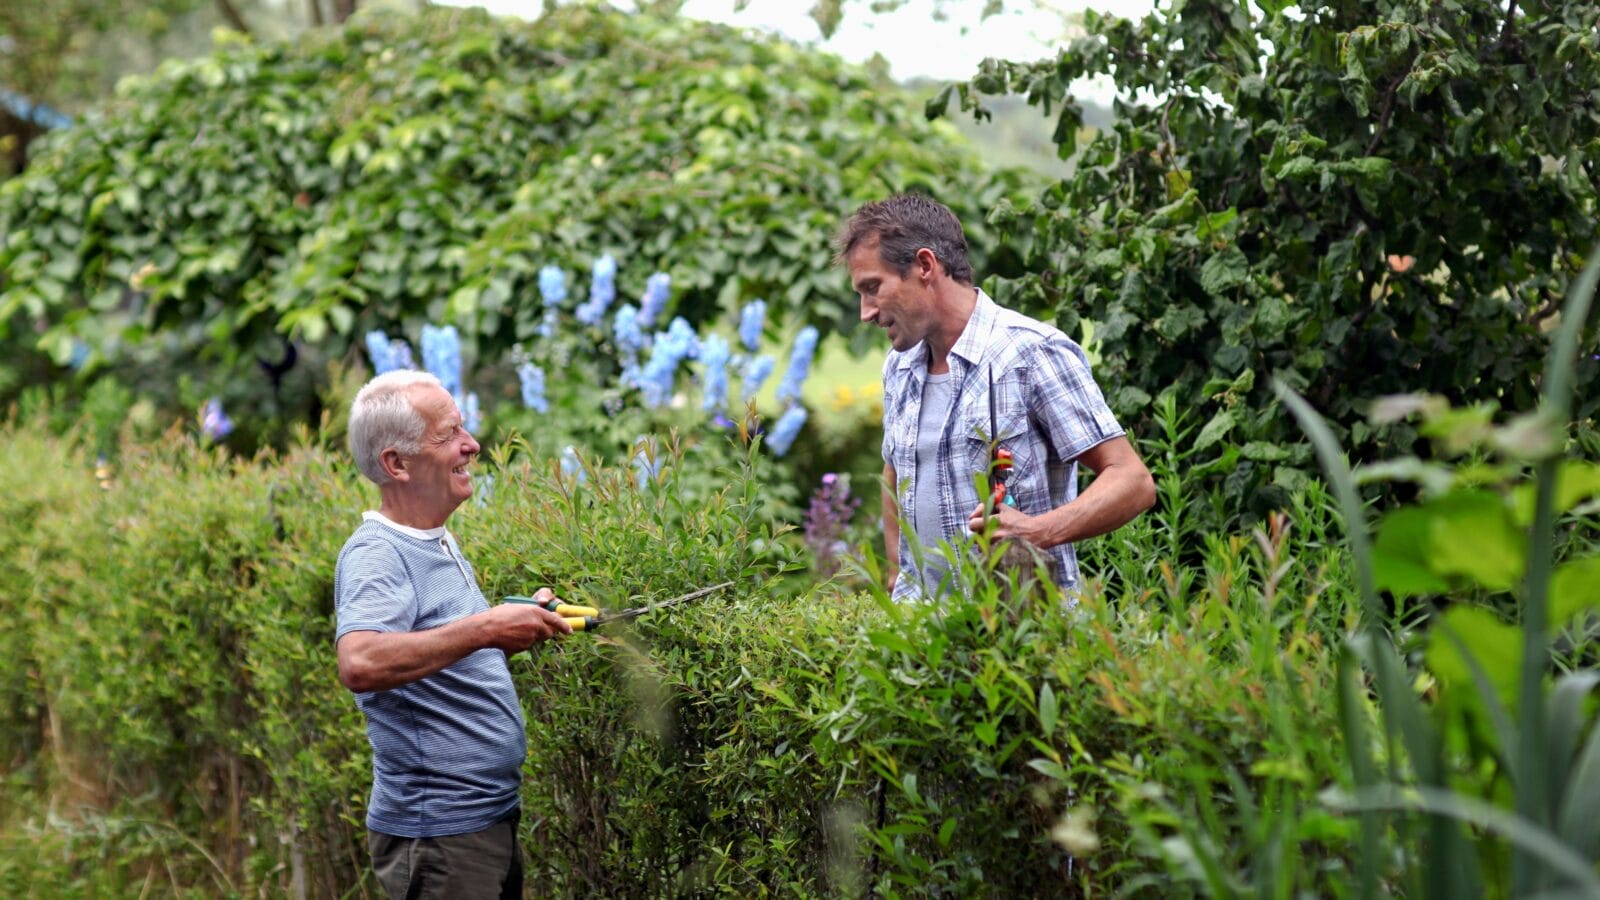 Senior man and mature men chatting over plants in garden